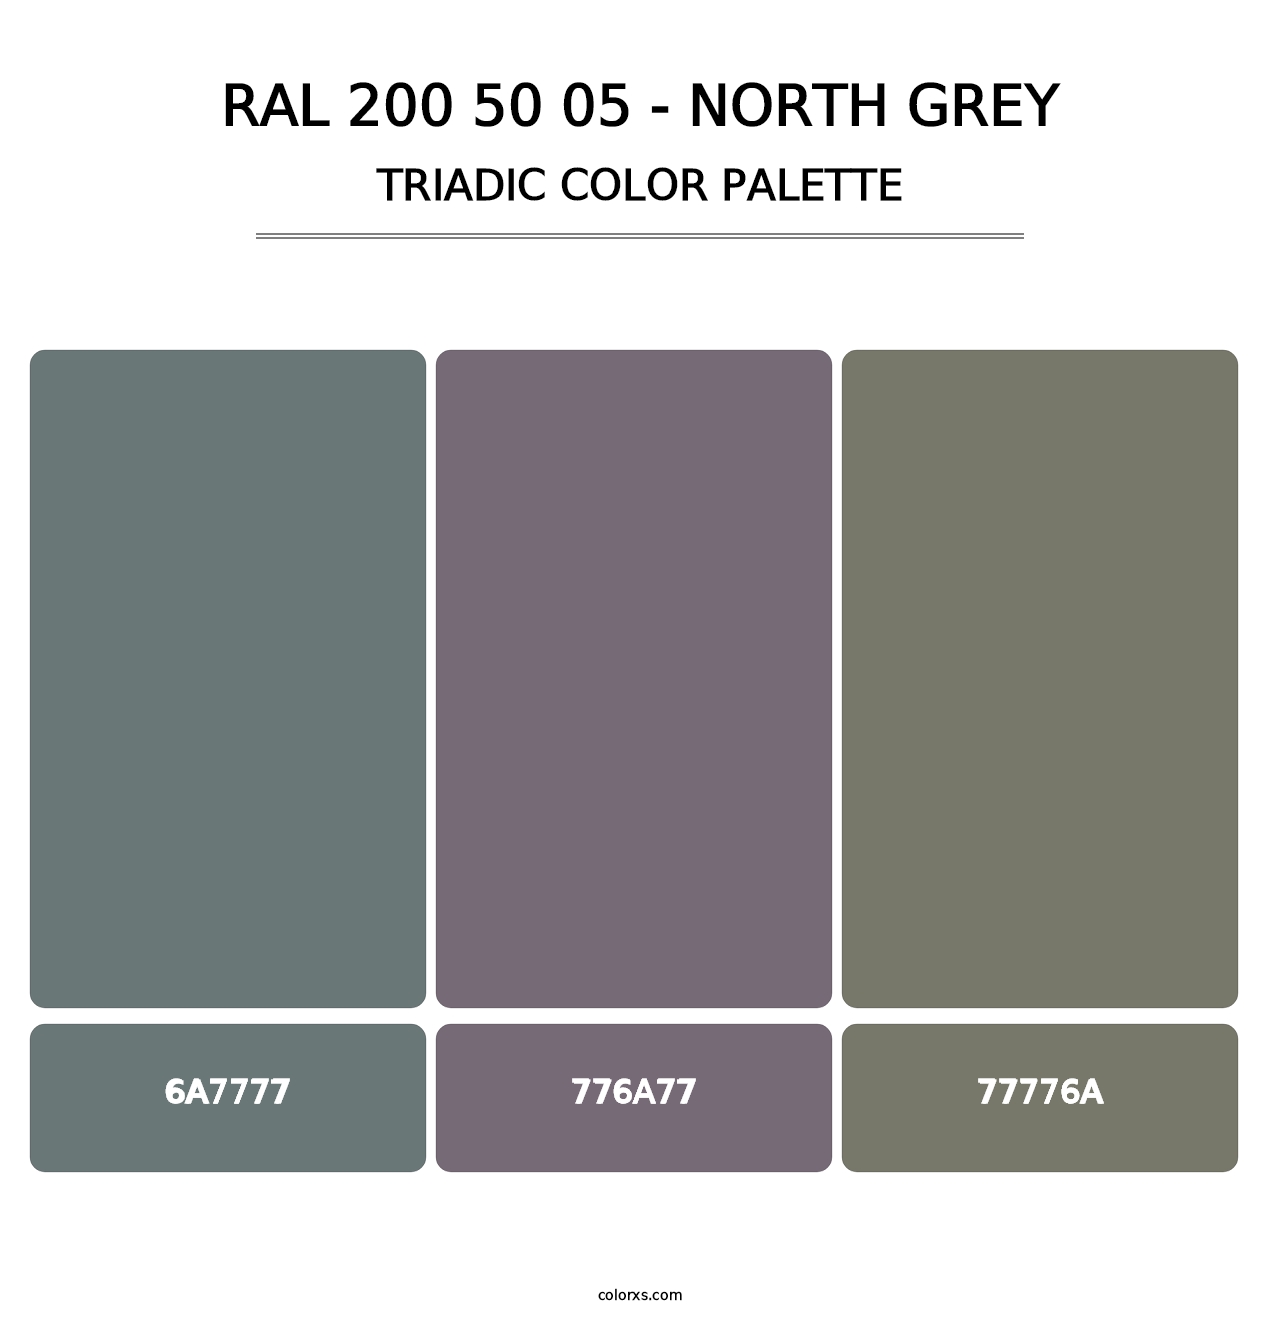 RAL 200 50 05 - North Grey - Triadic Color Palette